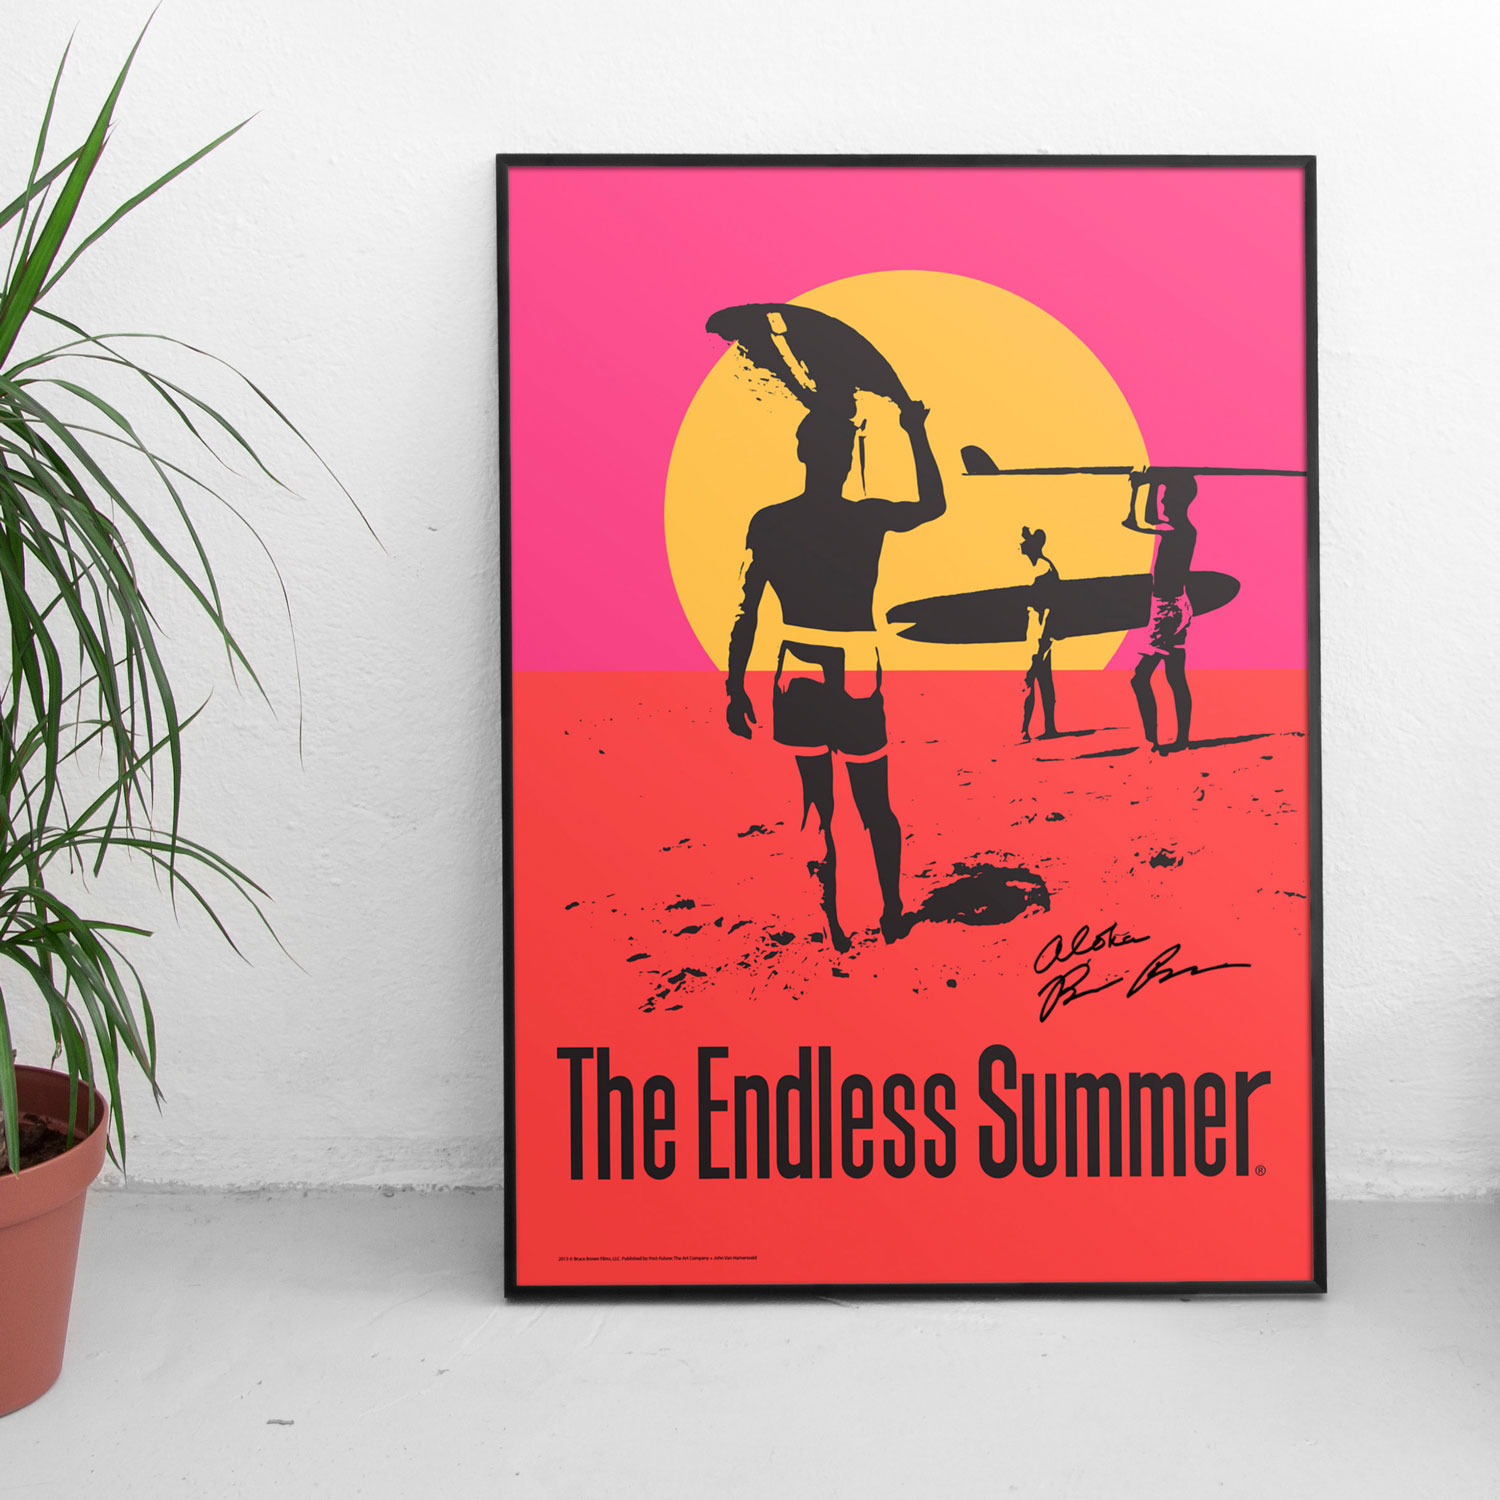 FRAMED) THE ENDLESS SUMMER MOVIE POSTER 66x96cm ART PRINT SURFING